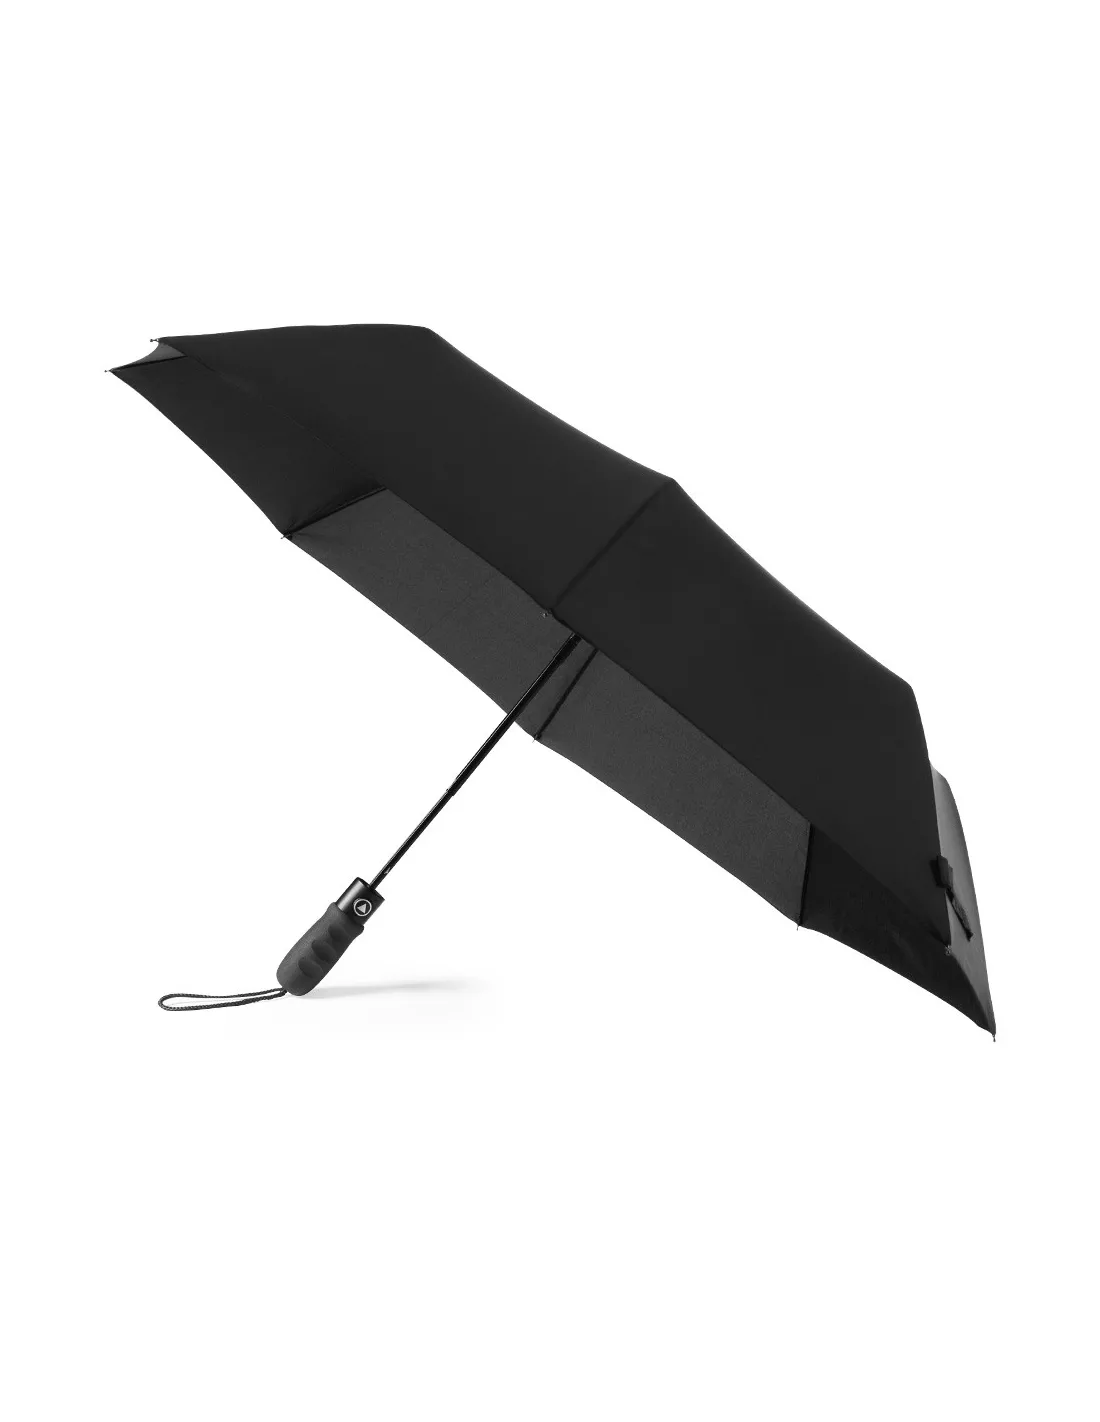 Paraguas plegable personalizado